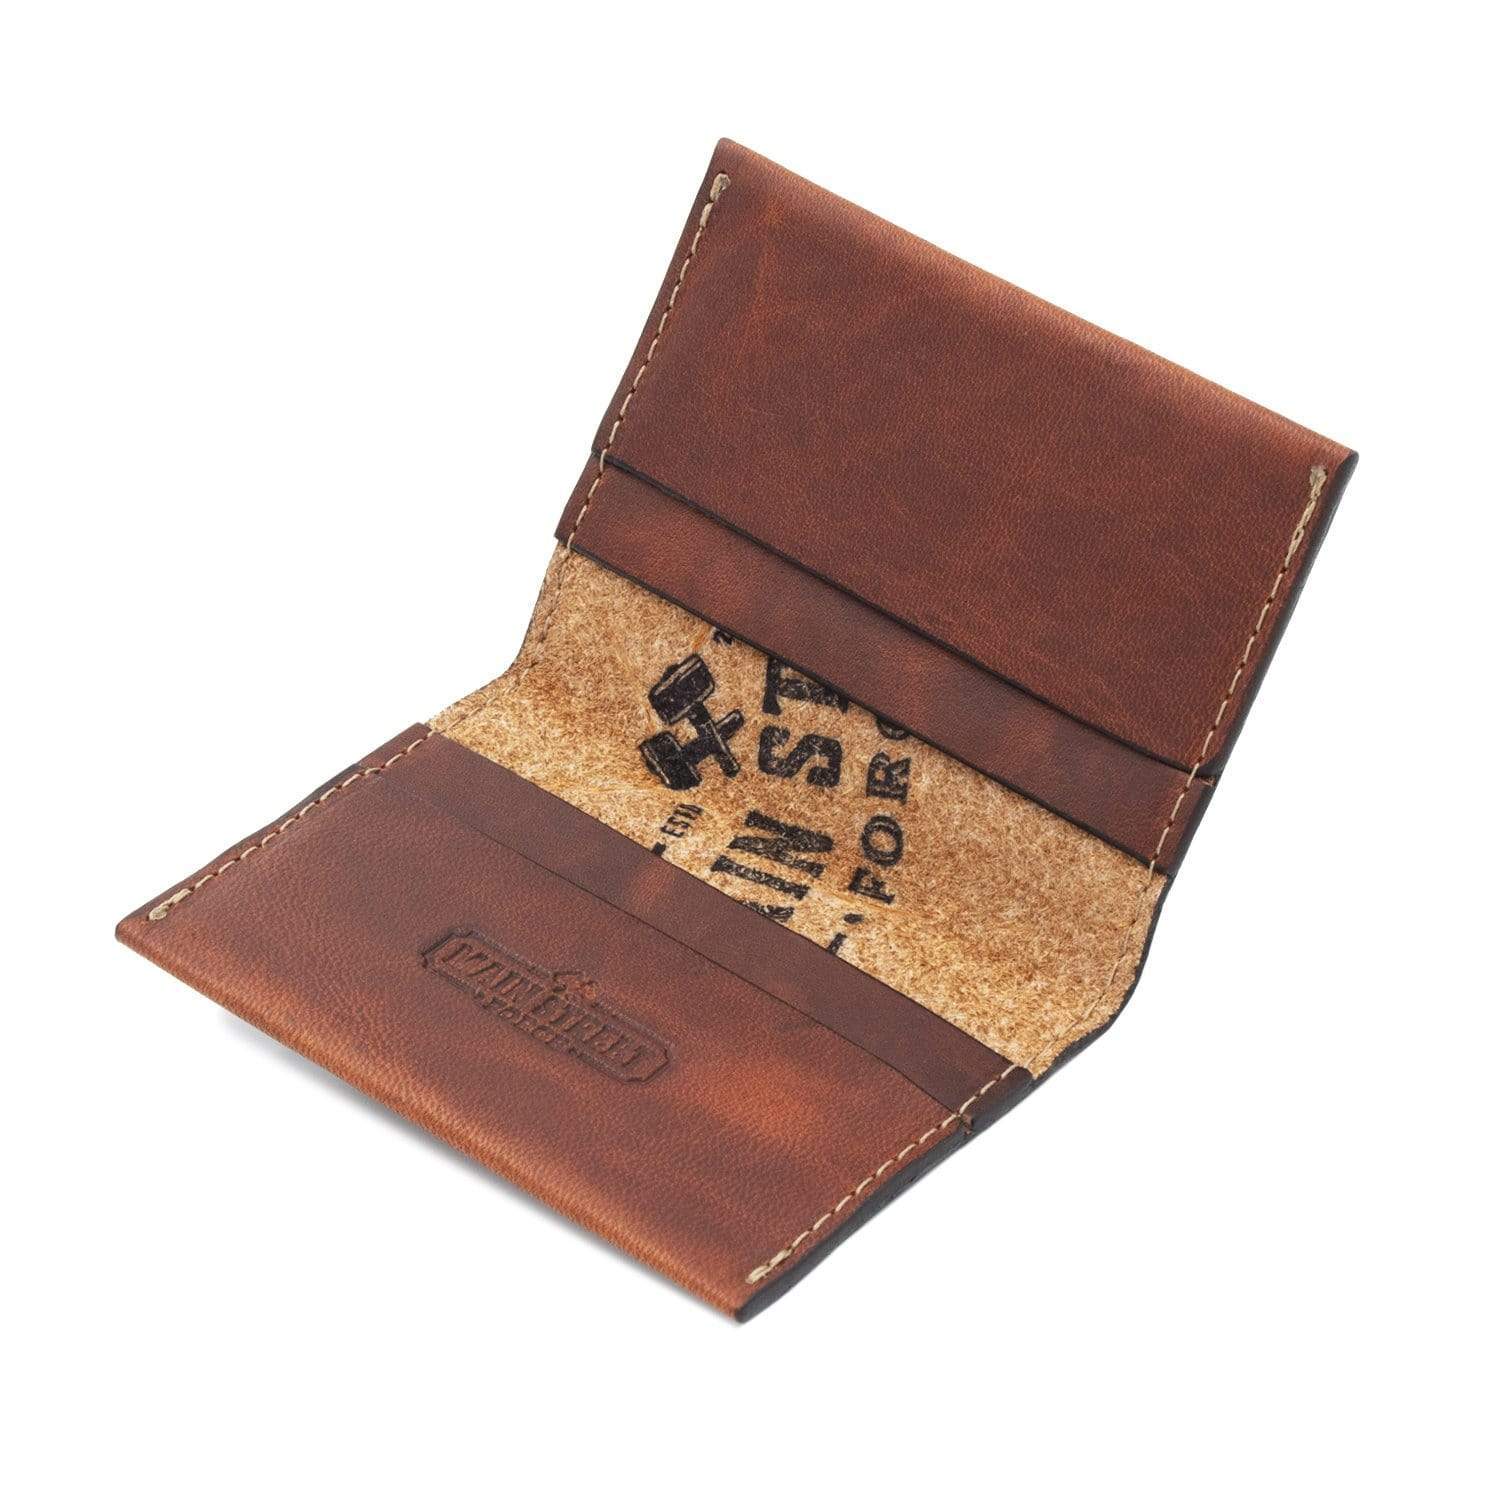 Business Card Wallet - Grommet's Leathercraft